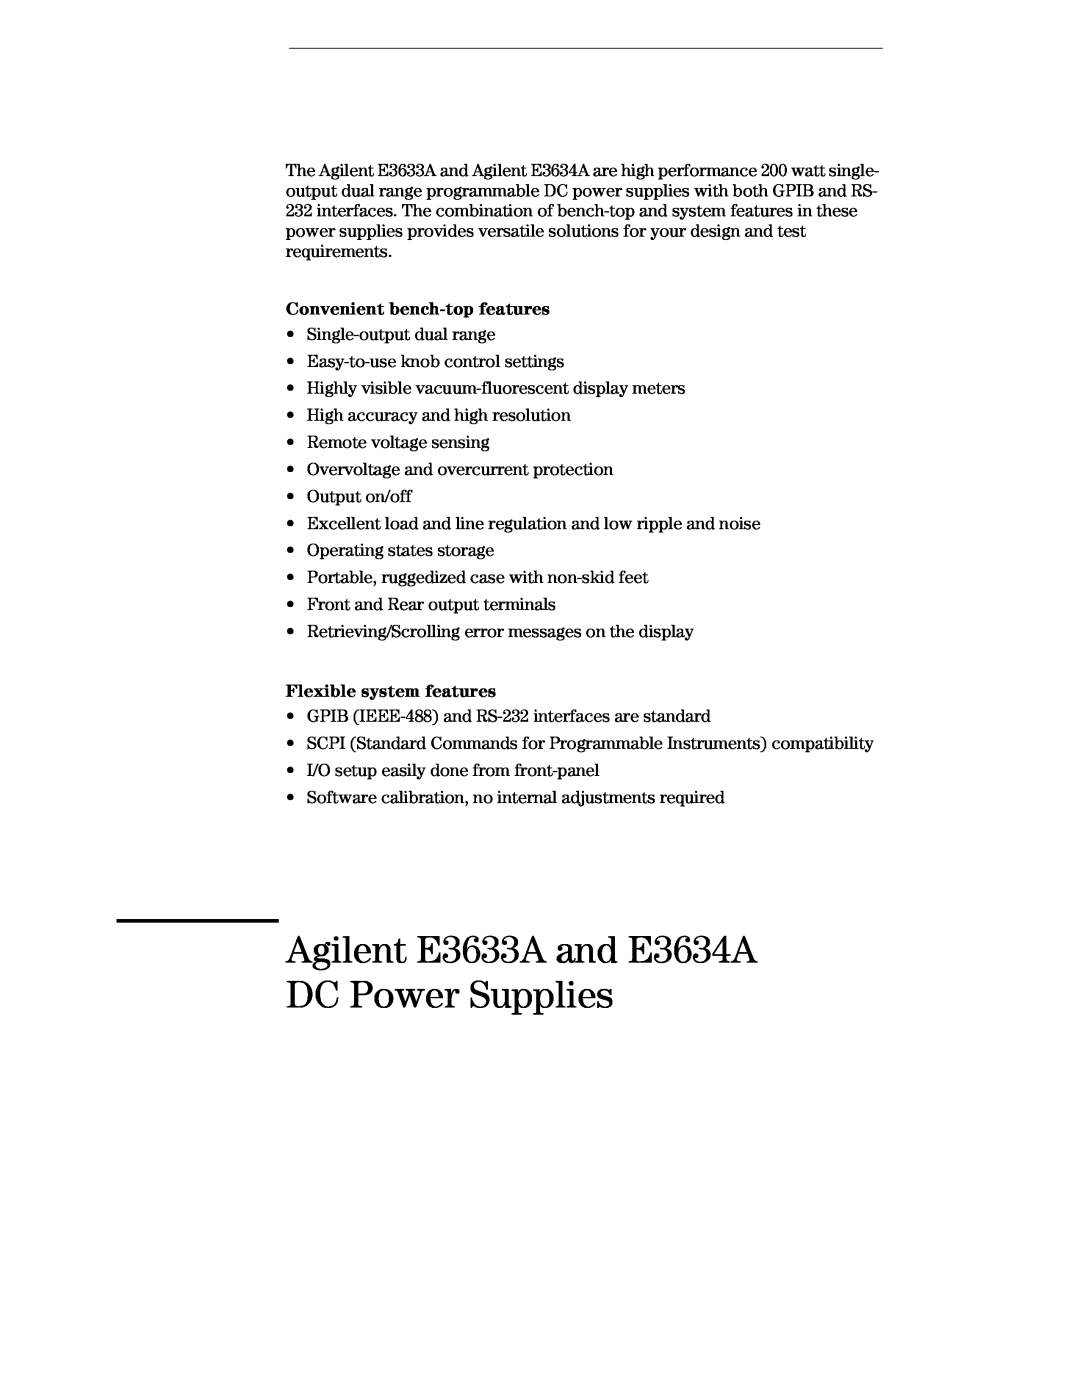 Agilent Technologies manual Agilent E3633A and E3634A DC Power Supplies, Convenient bench-top features 